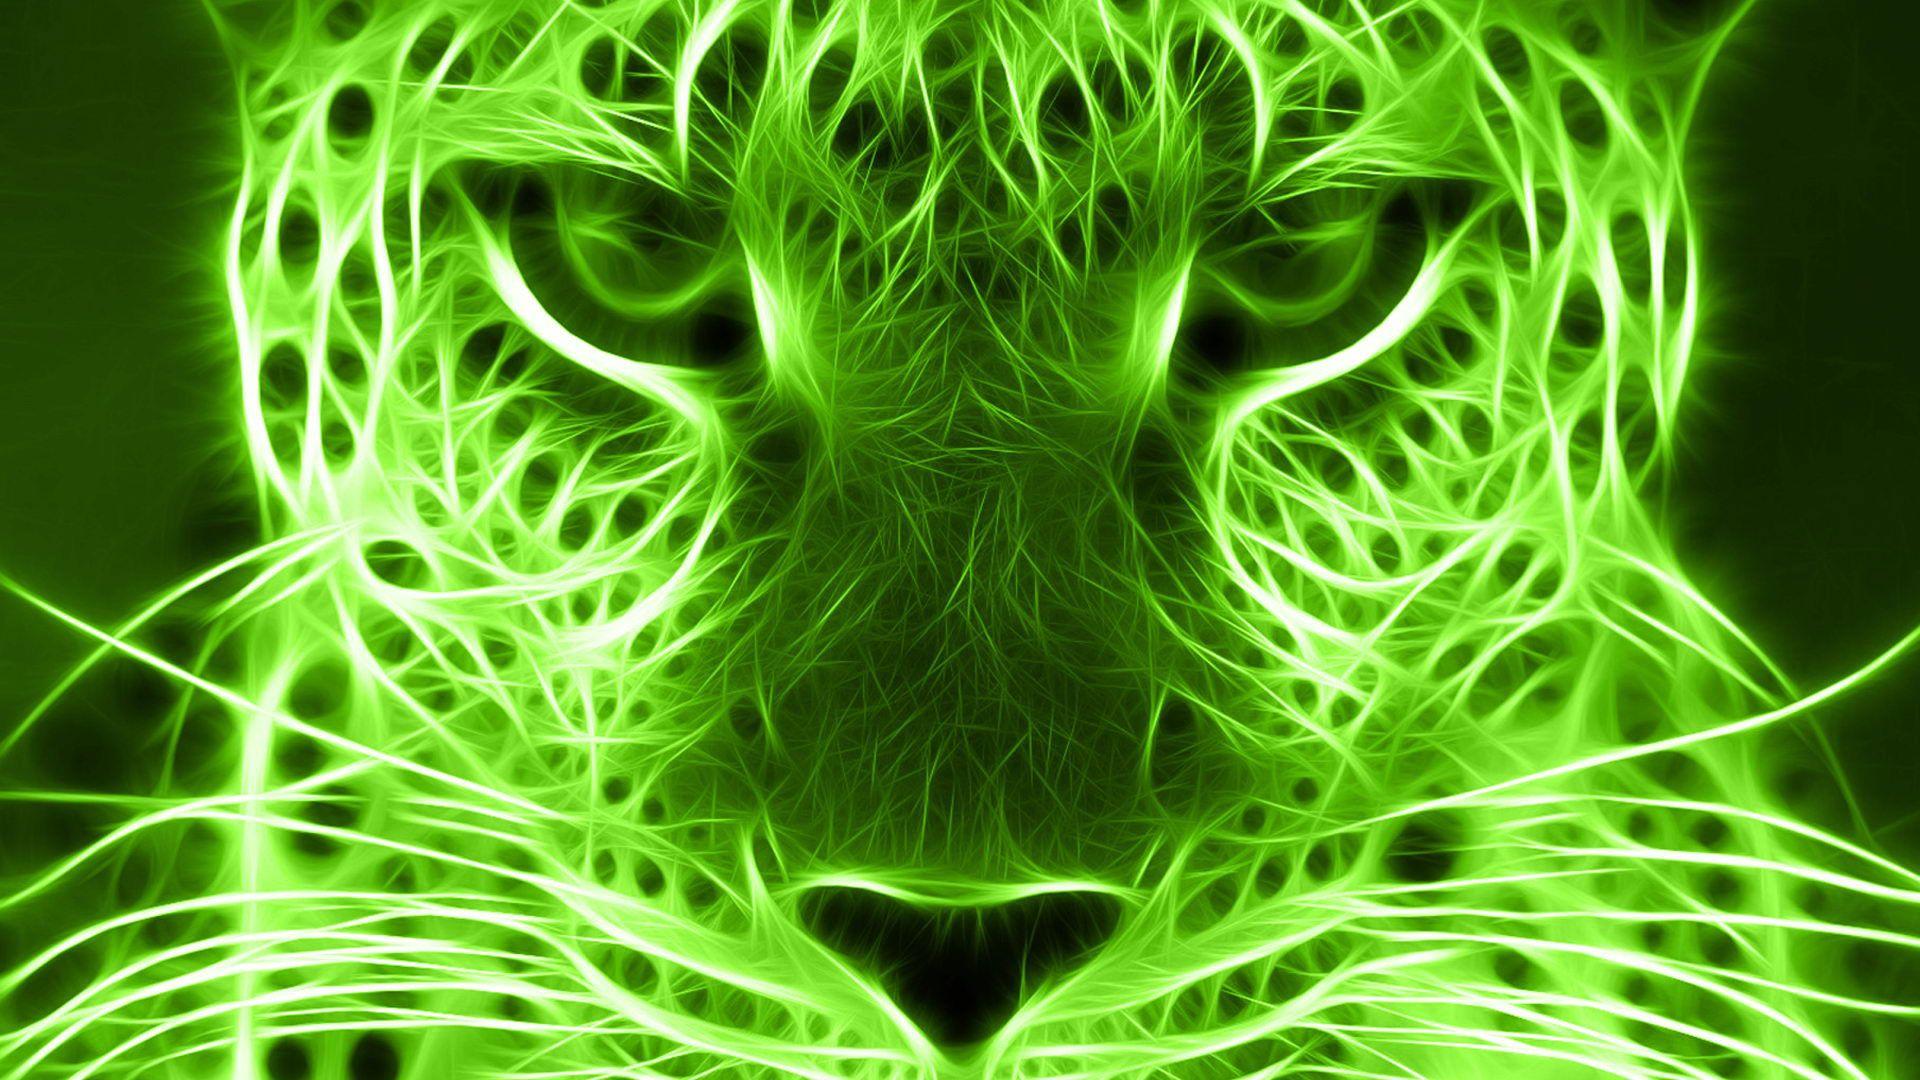 GREEN ANIMALS DIGITAL ART NEON DESKTOP BACKGROUND WALLPAPER 1080p